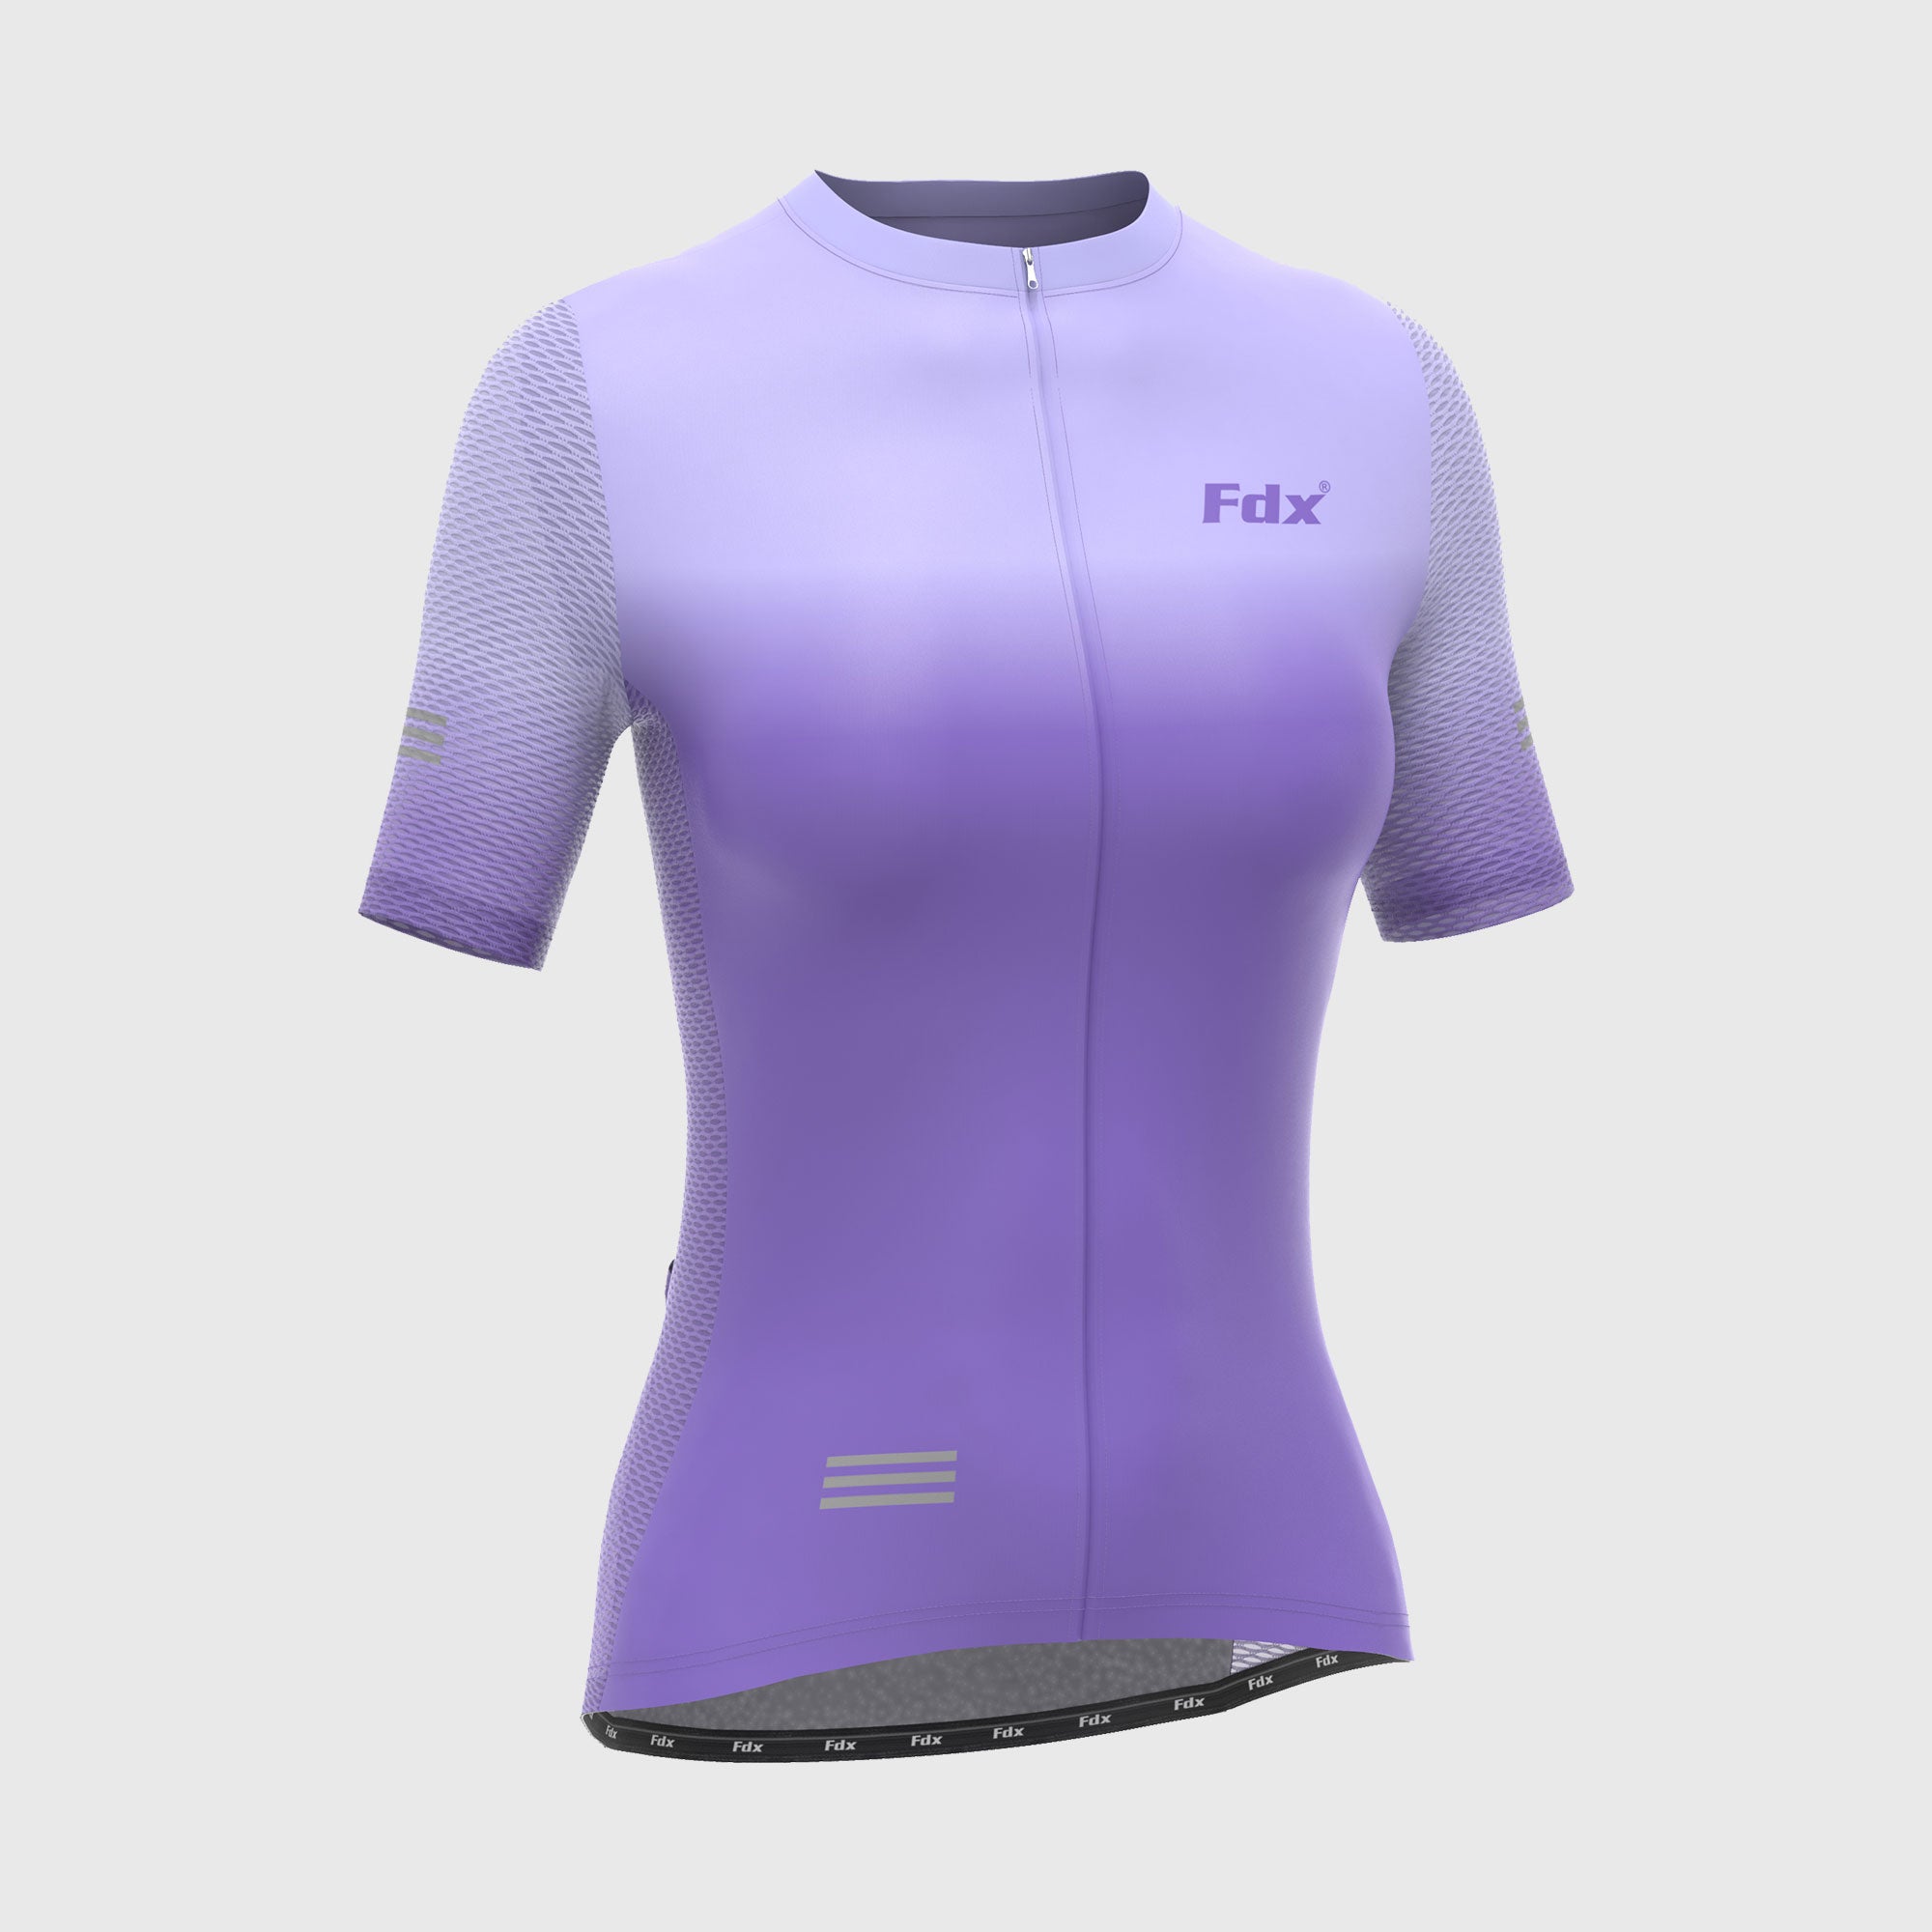 Fdx Women's Purple Short Sleeve Cycling Jersey for Summer Best Road Bike Wear Top Light Weight, Full Zipper, Pockets & Hi-viz Reflectors - Duo